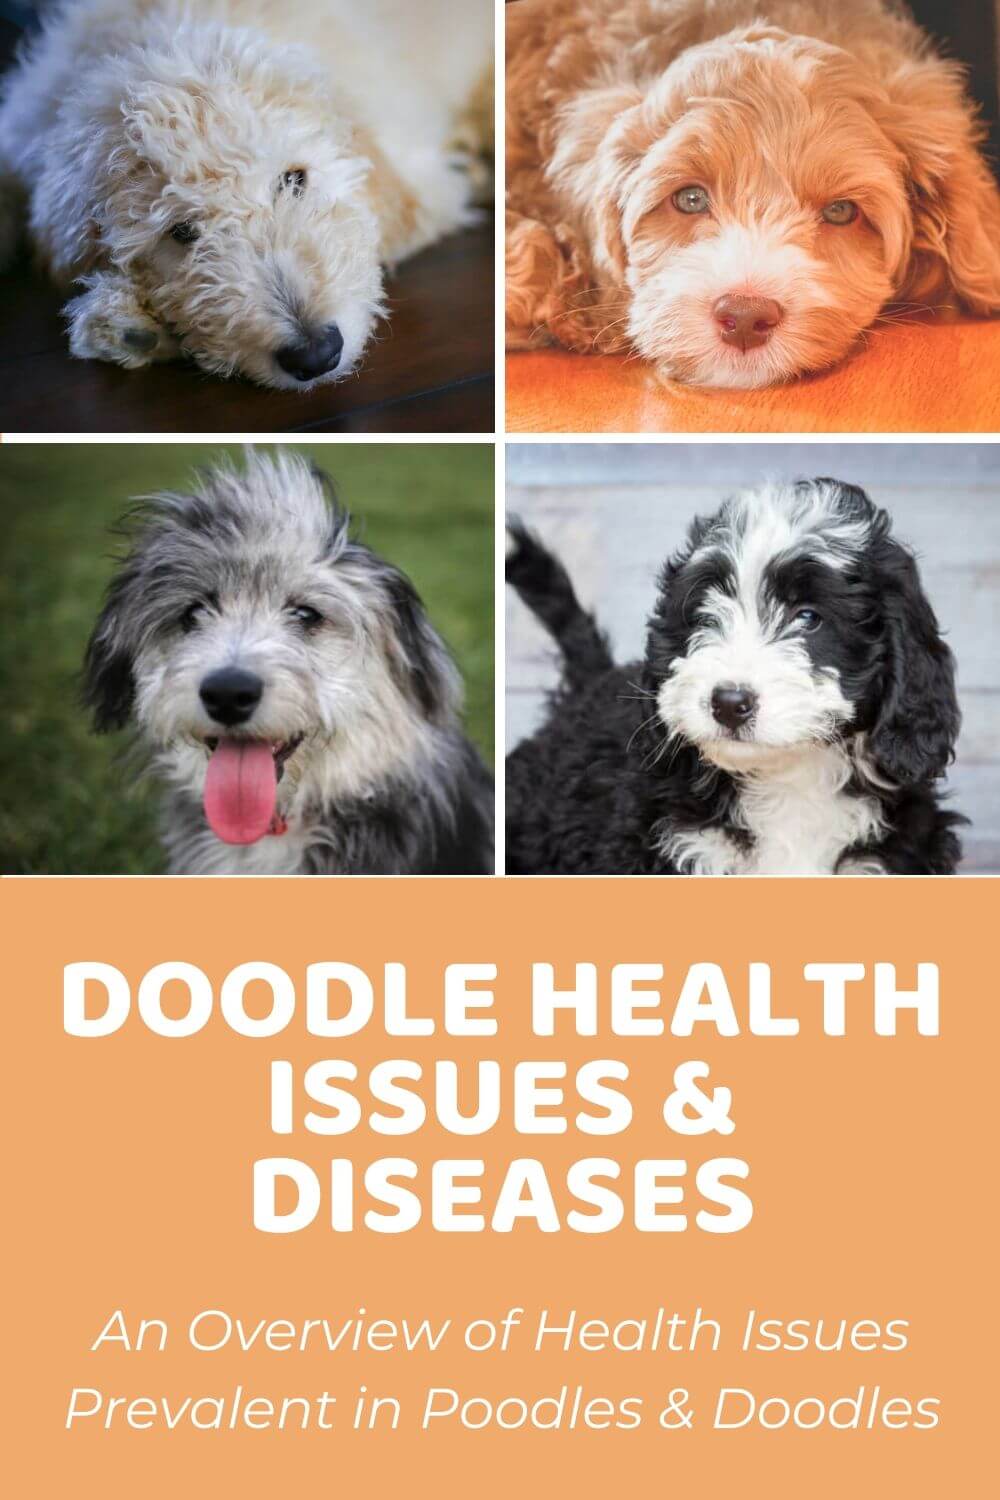 do mini goldendoodles have health problems